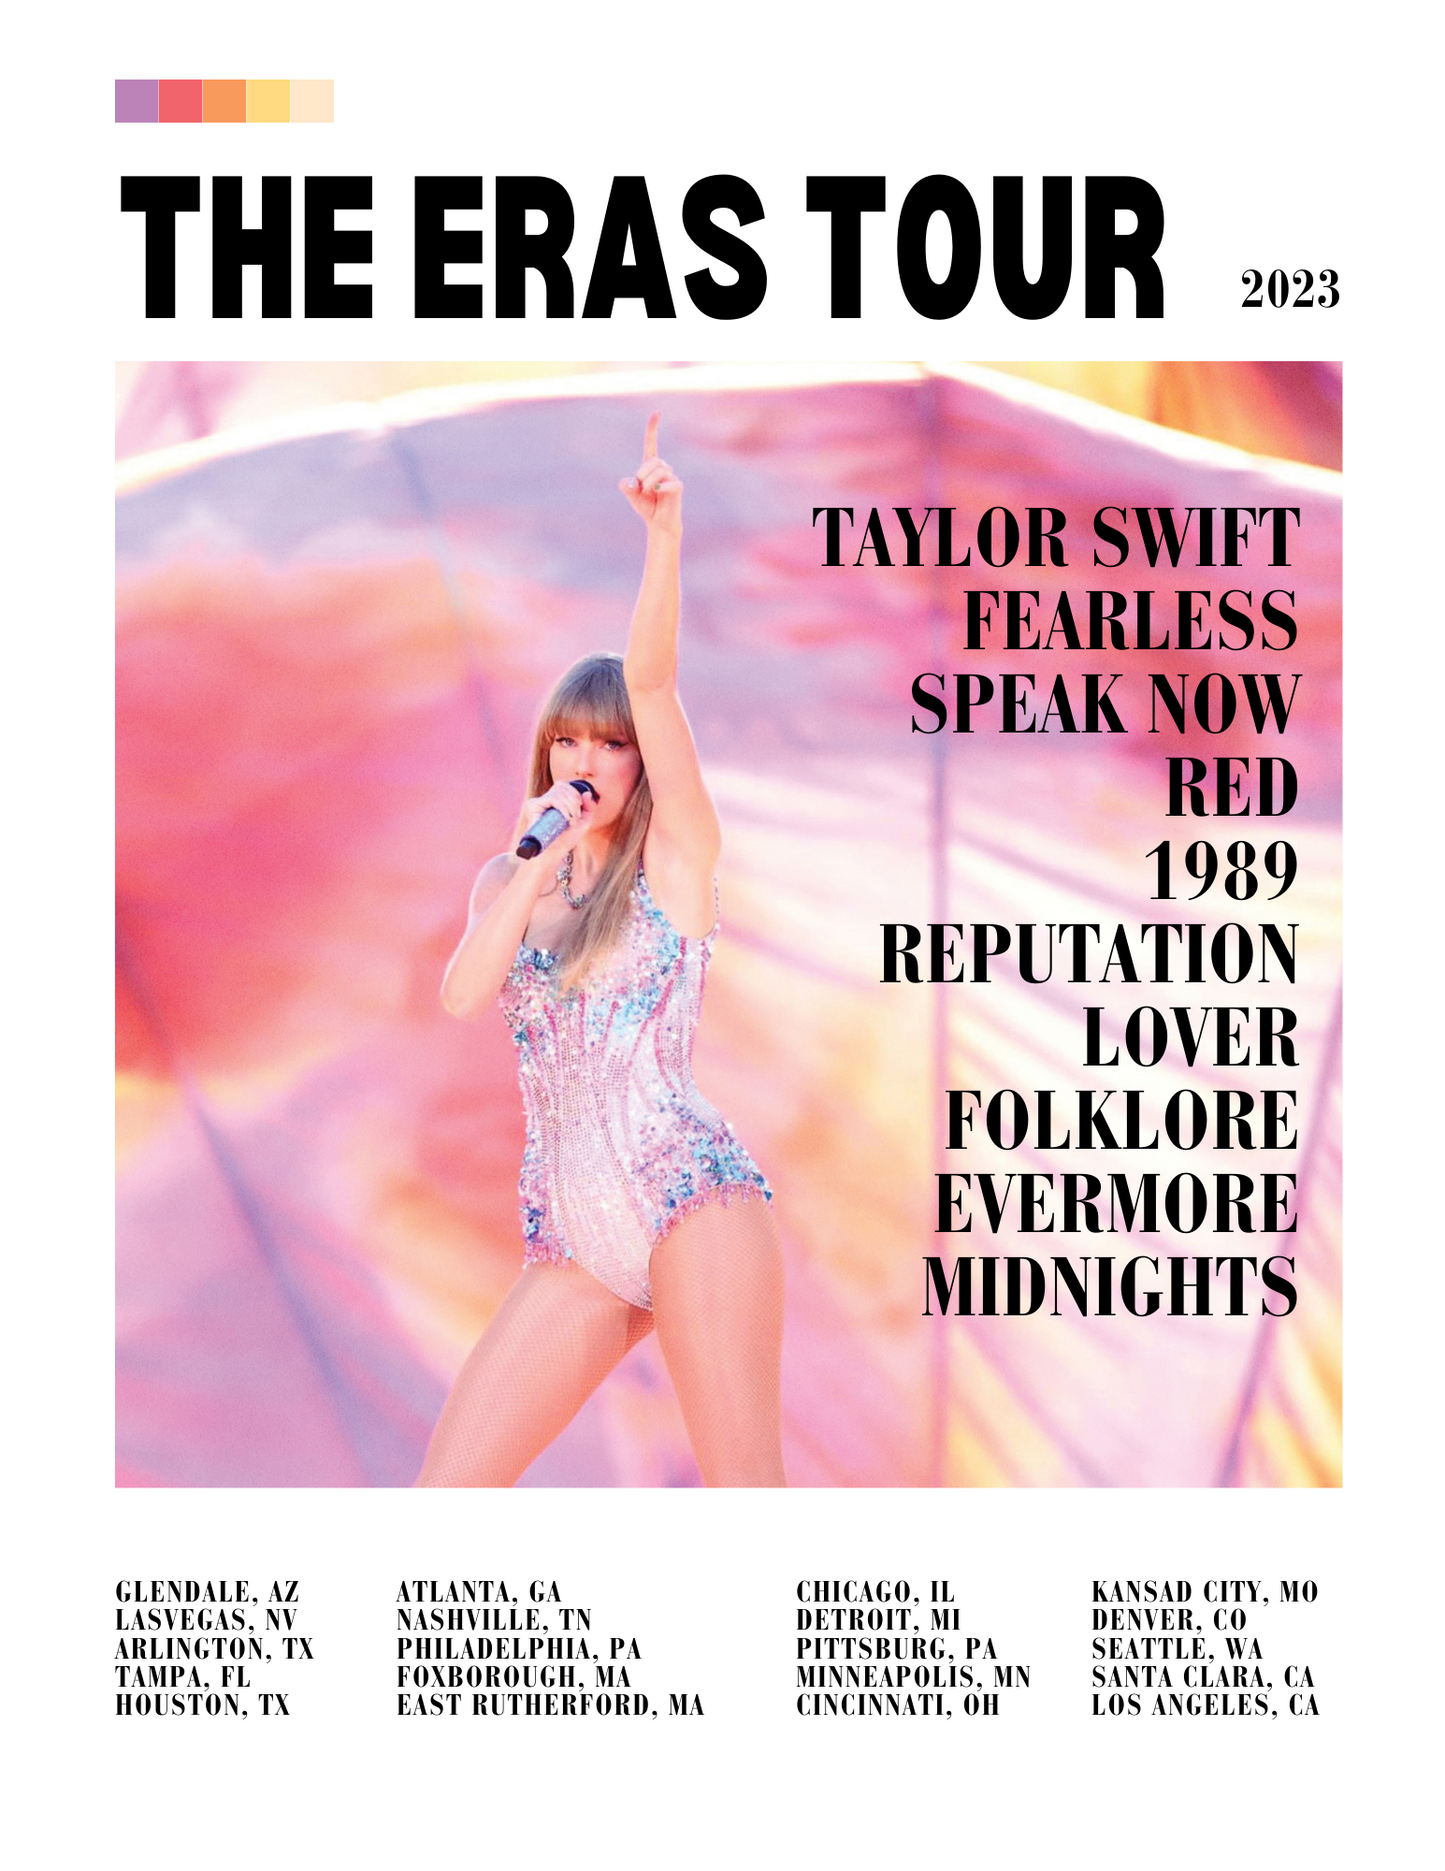 Taylor Swift Eras Tour movie printables | Printable bundle